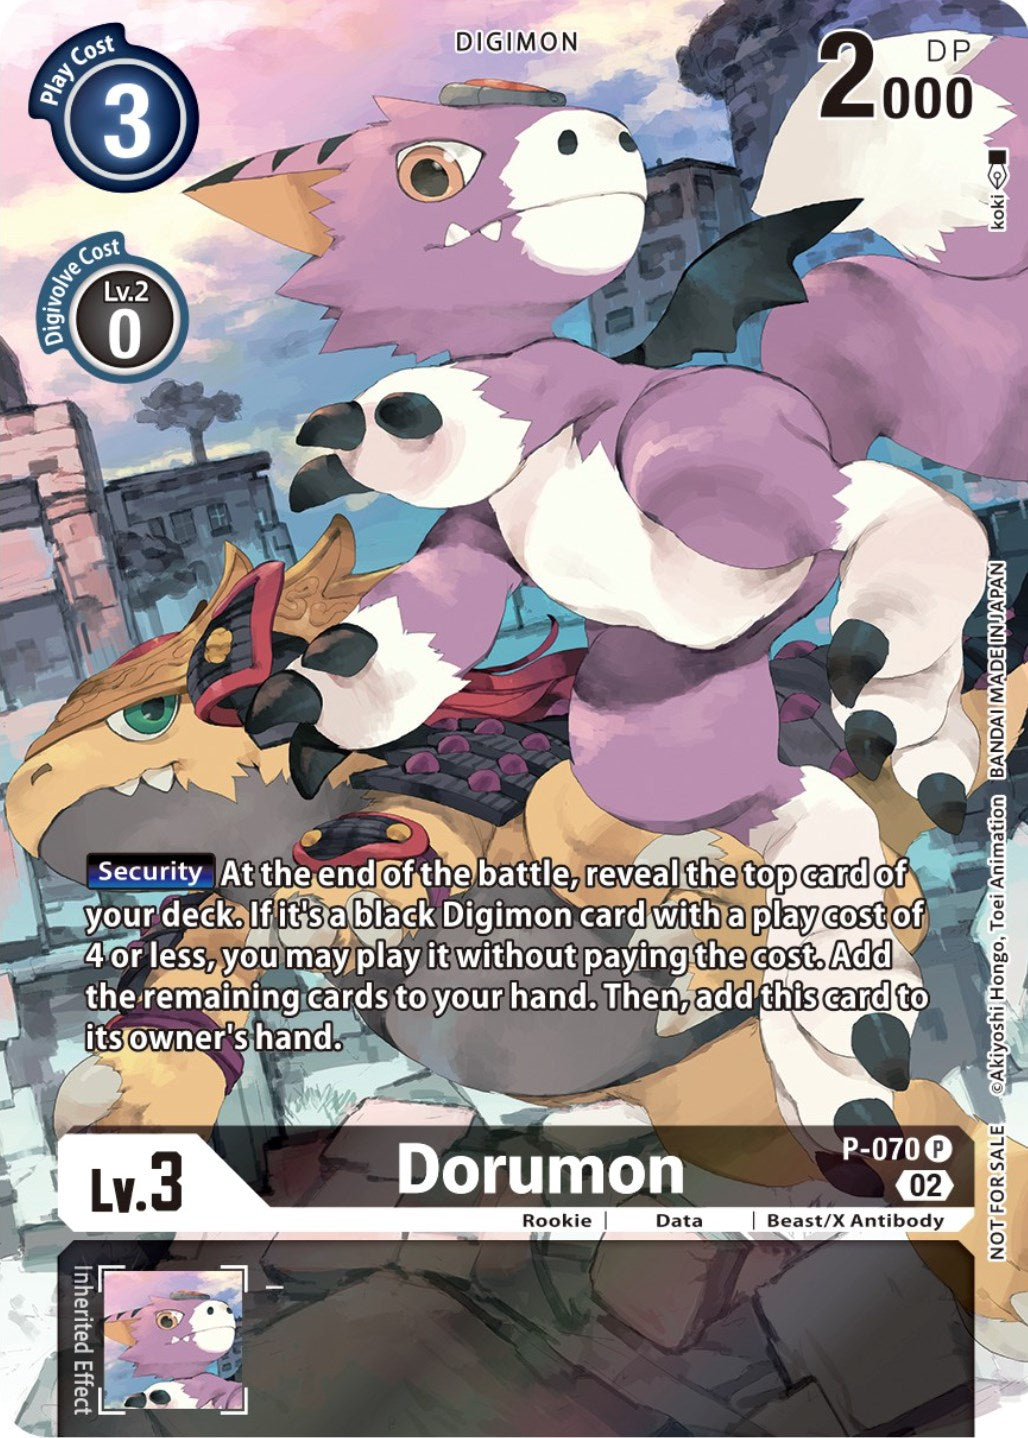 Dorumon [P-070] (Official Tournament Pack Vol. 10) [Promotional Cards] | Amazing Games TCG